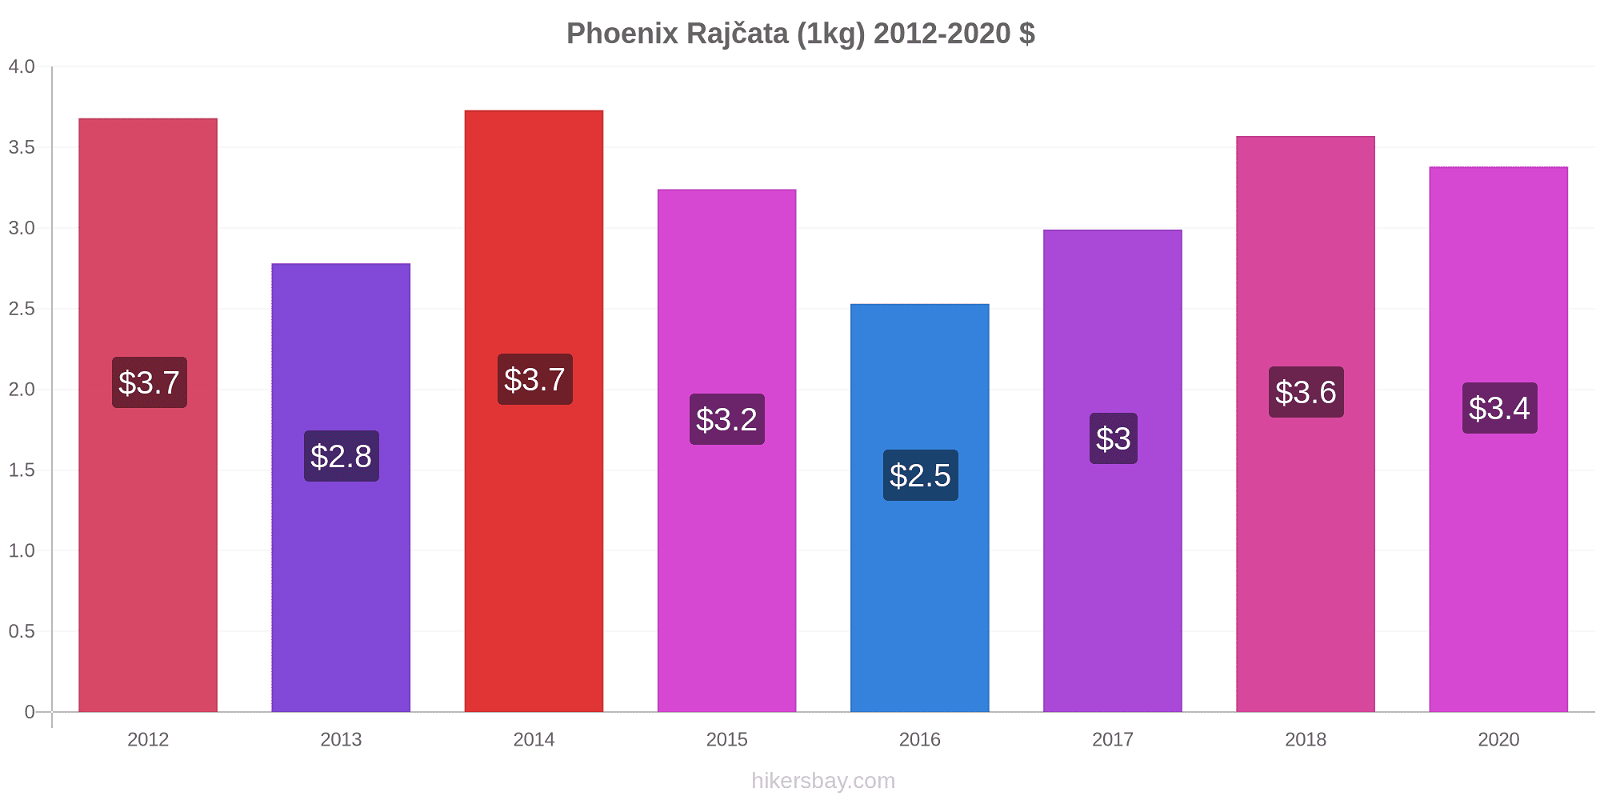 Phoenix změny cen Rajčata (1kg) hikersbay.com